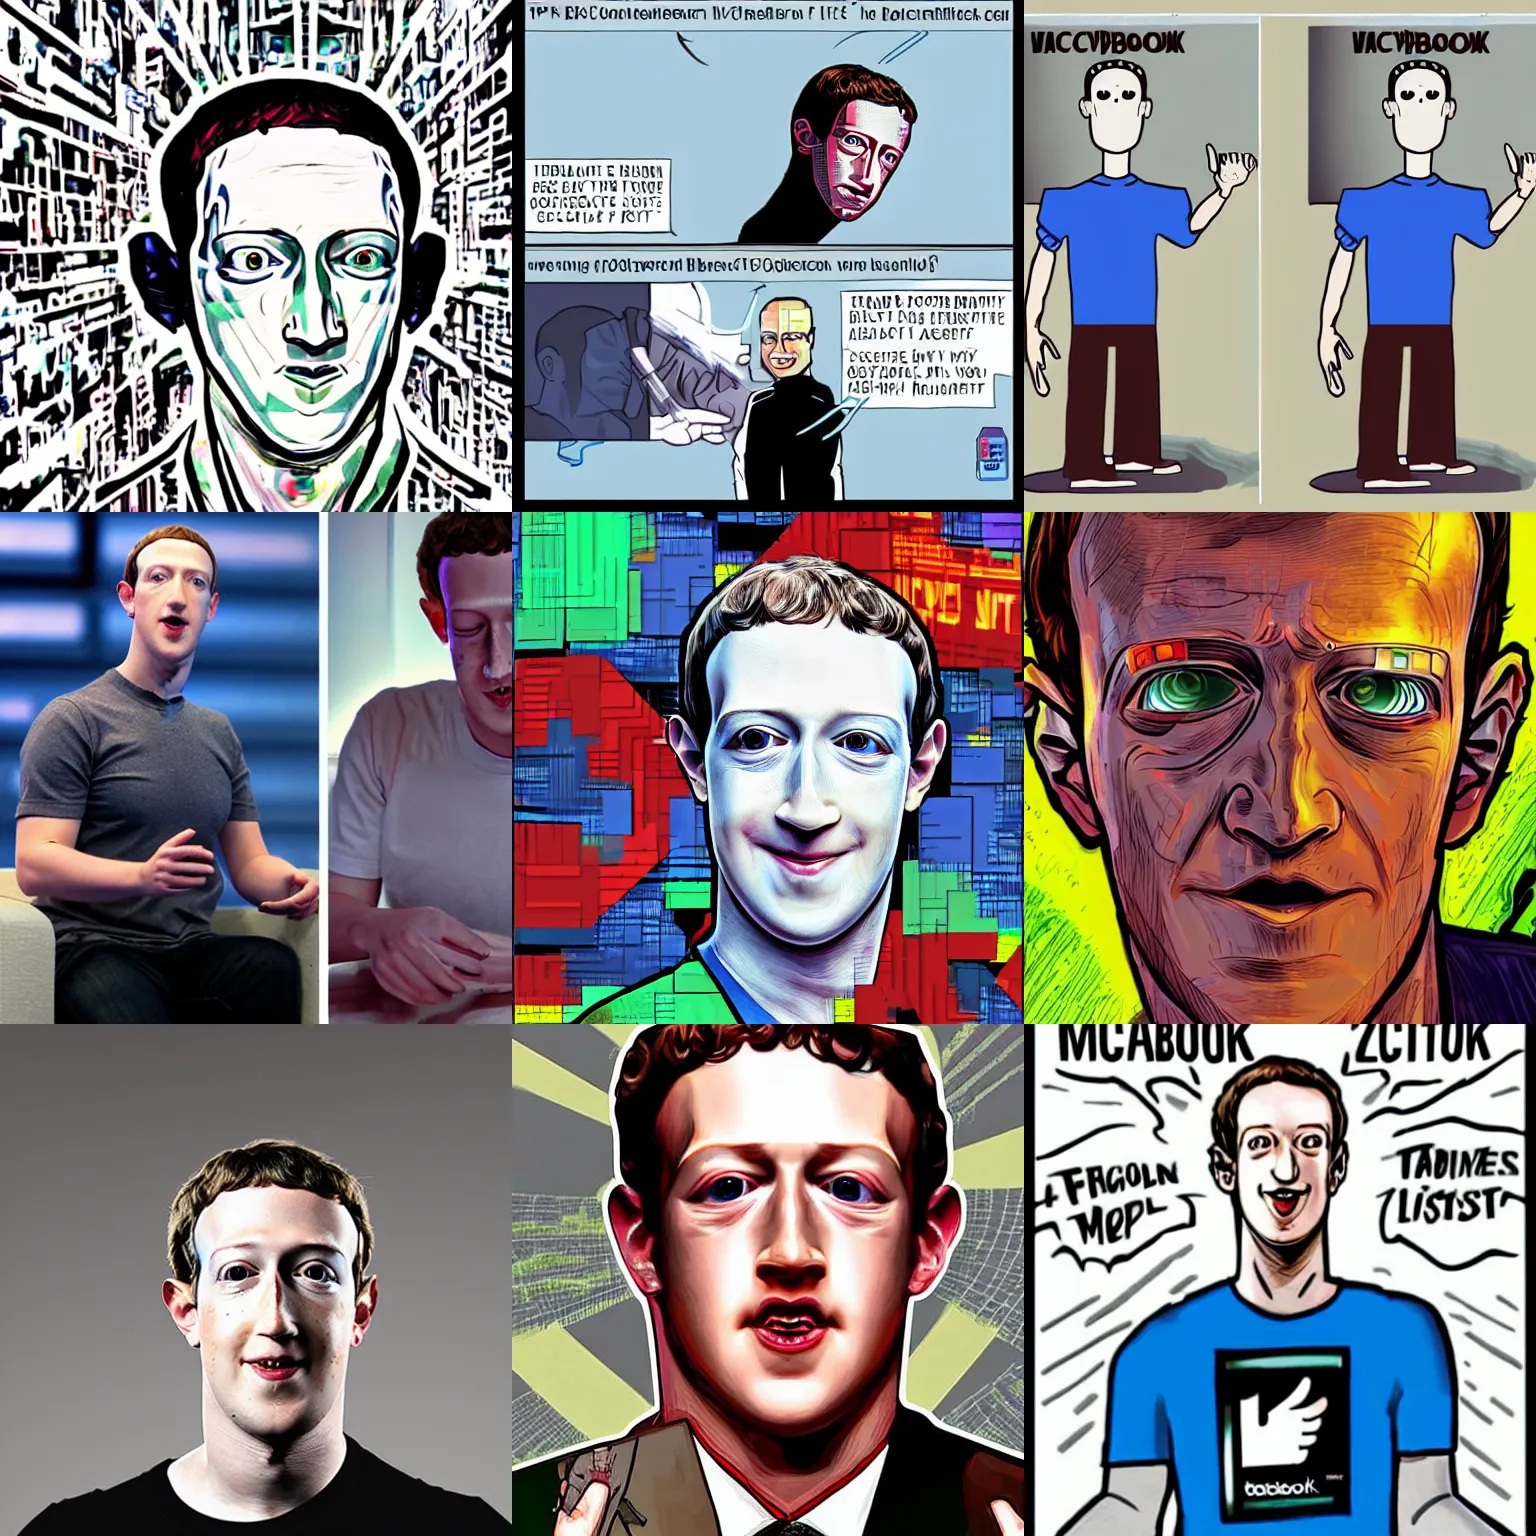 Prompt: evil cyborg mark zuckerberg